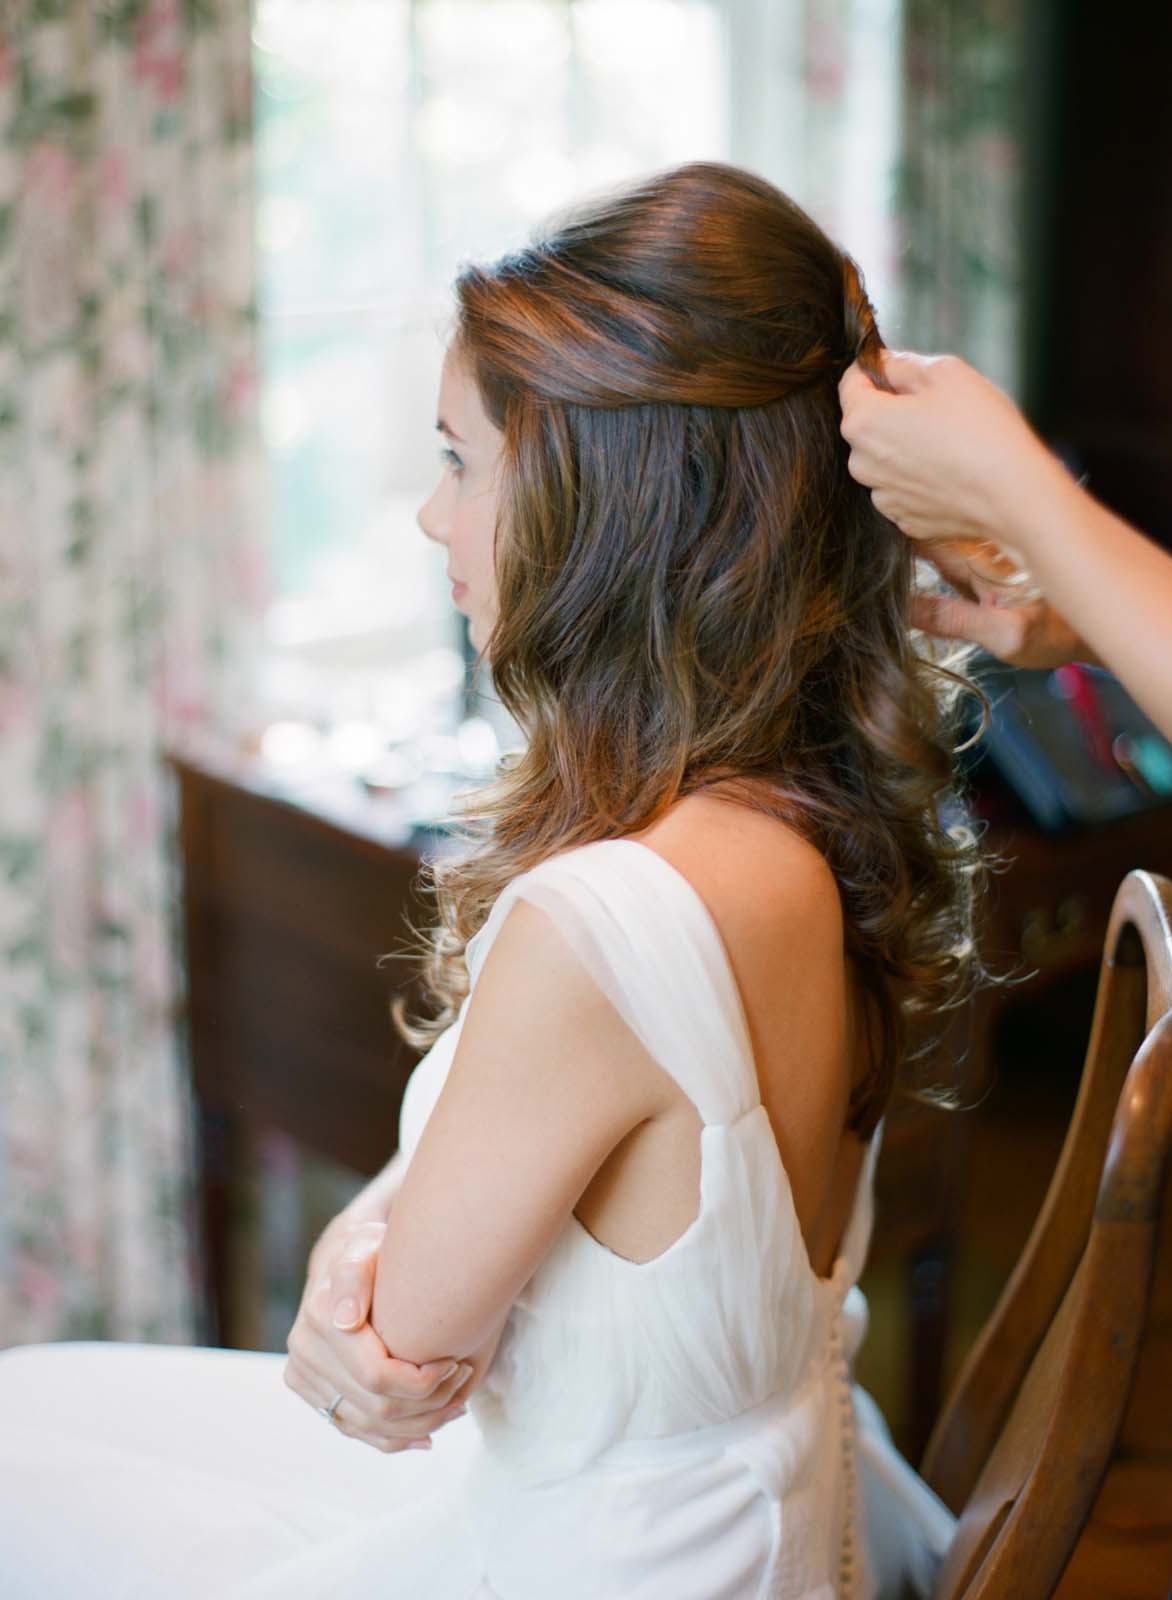 Bridal hair in the making…
Jennifer Mantura, Hair and Makeup
Photography Elisa B http://www.elisabphotography.com/
http://www.oncewed.com/62454/wedding-blog/real-weddings/elegant-virginia-outdoor-wedding/